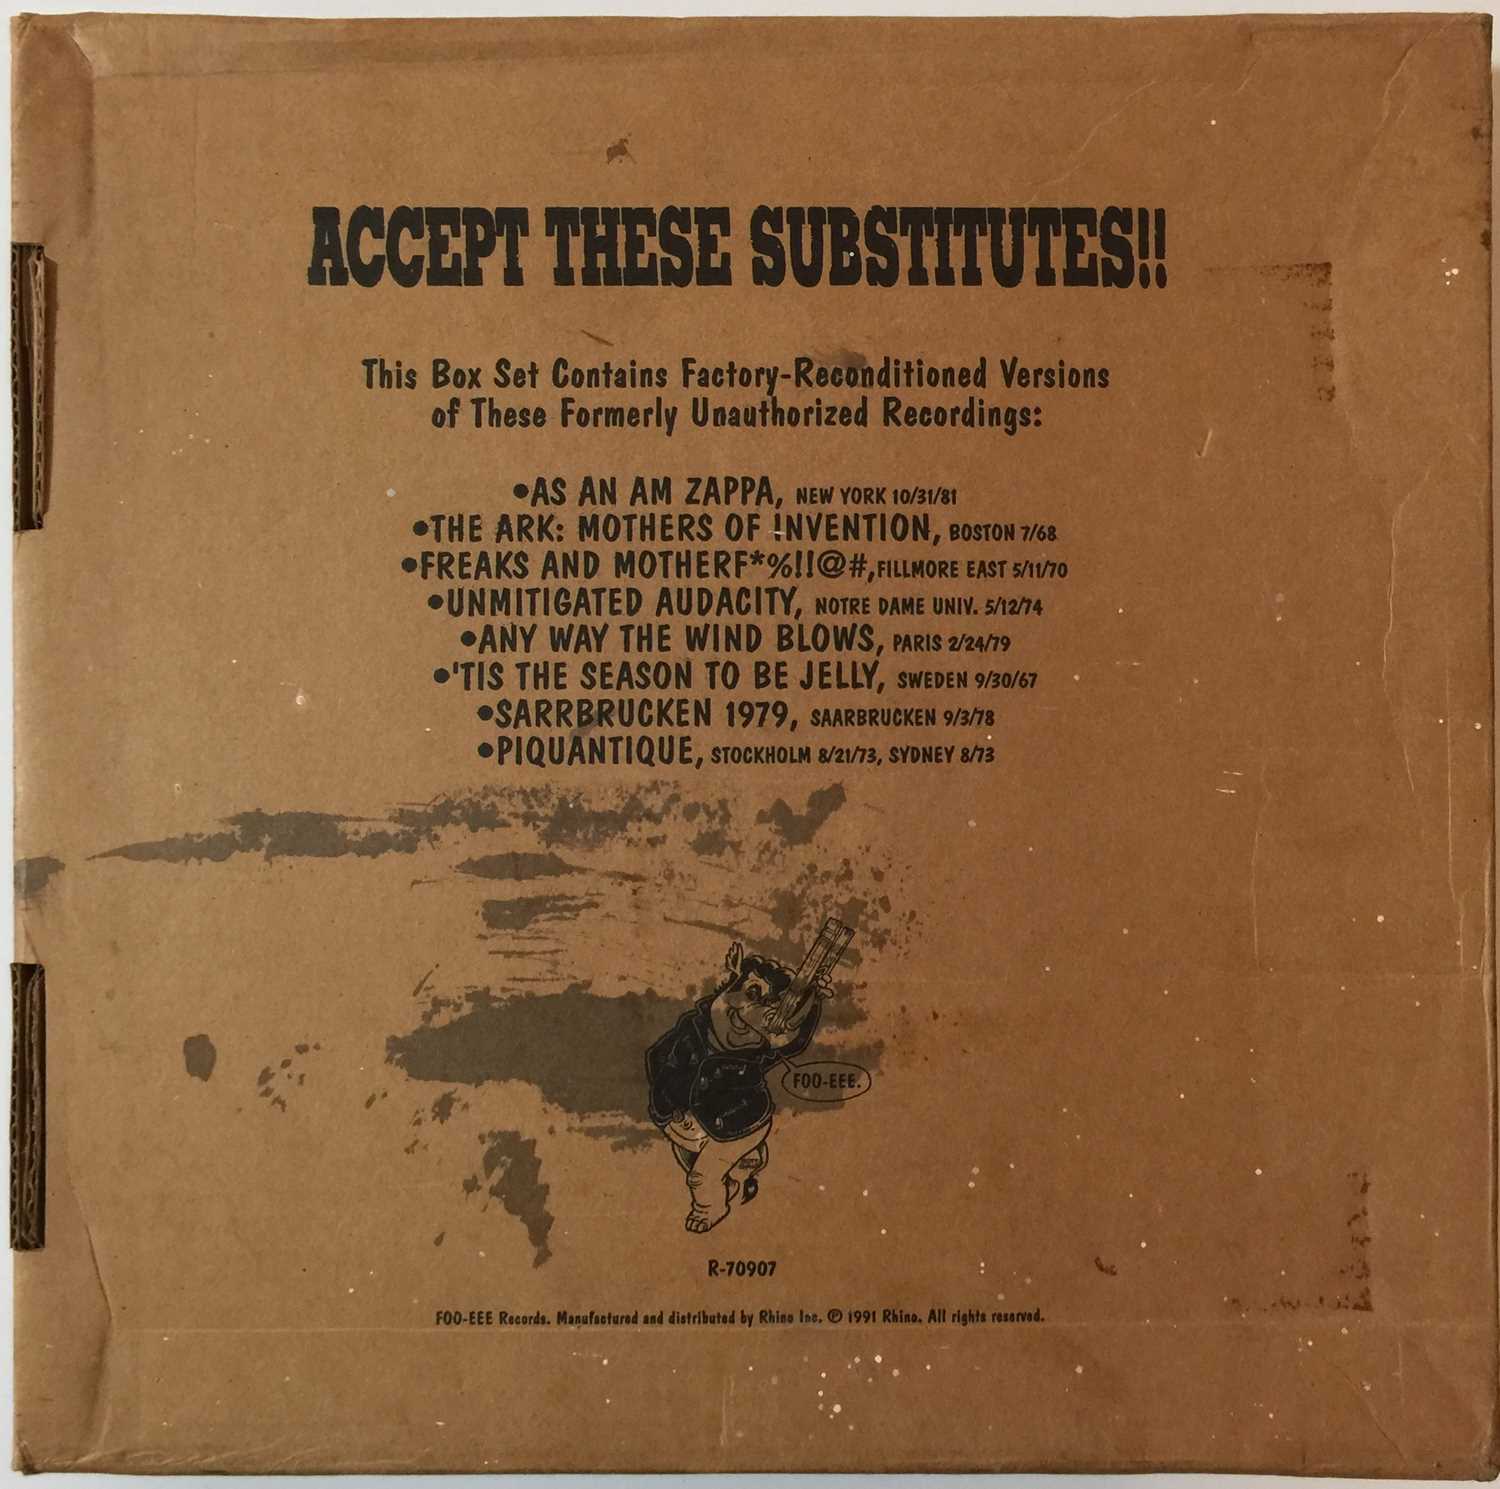 FRANK ZAPPA - BEAT THE BOOTS! (8 ALBUM 10 x LP BOX SET - FOO-EE RECORDS R-70907) - Image 6 of 6